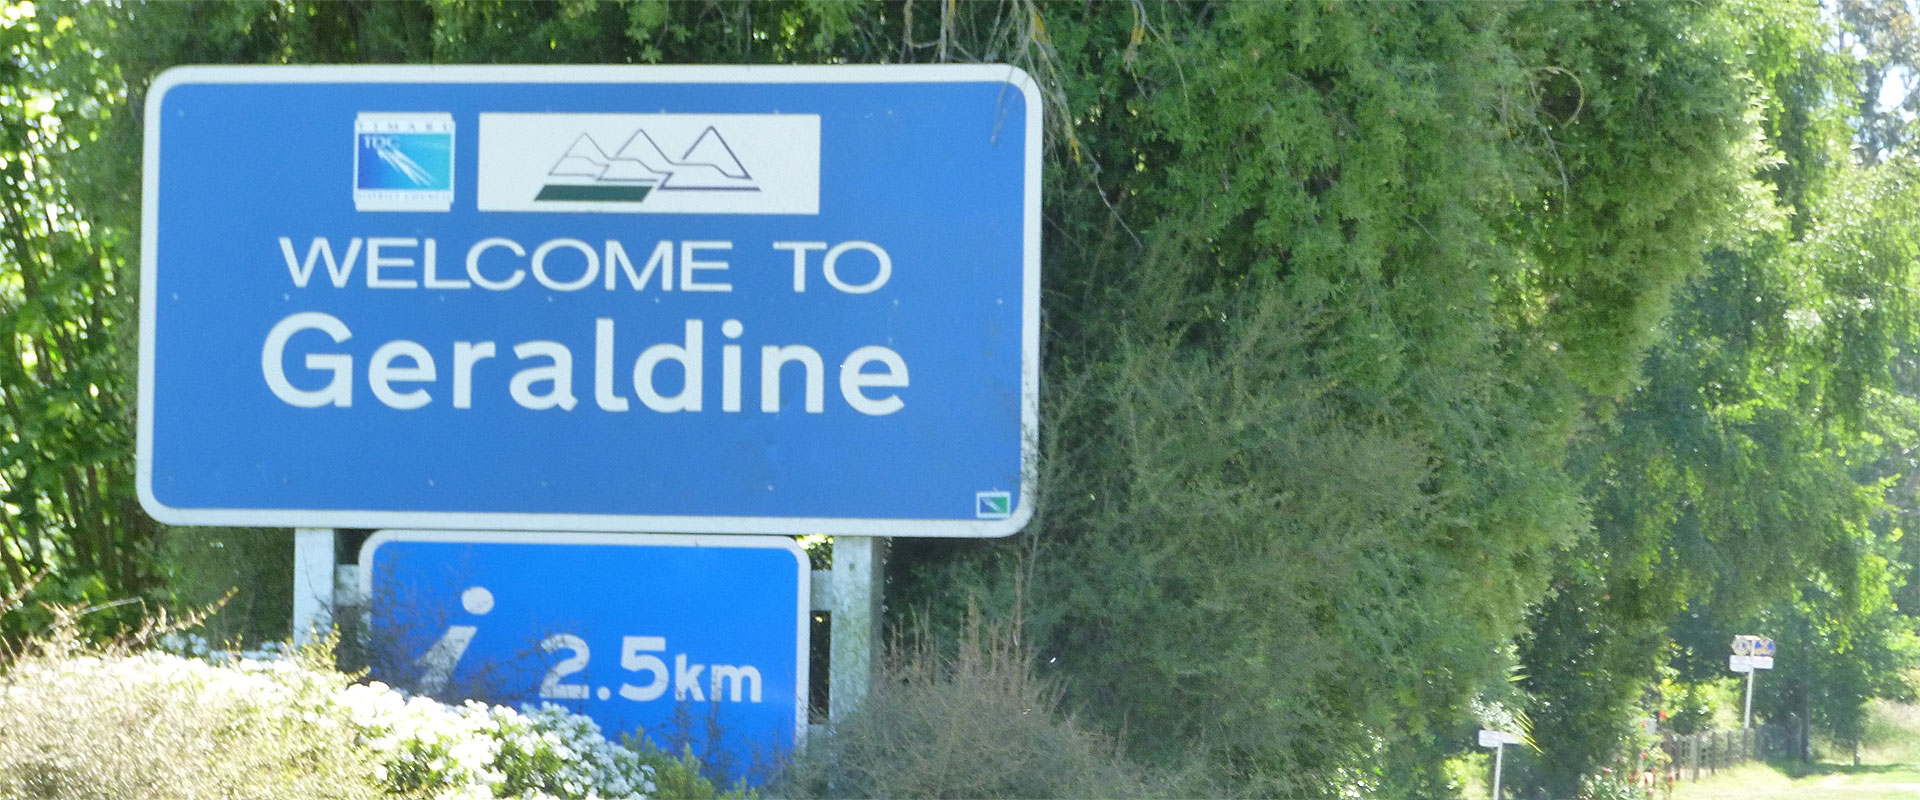 welcome to geraldine